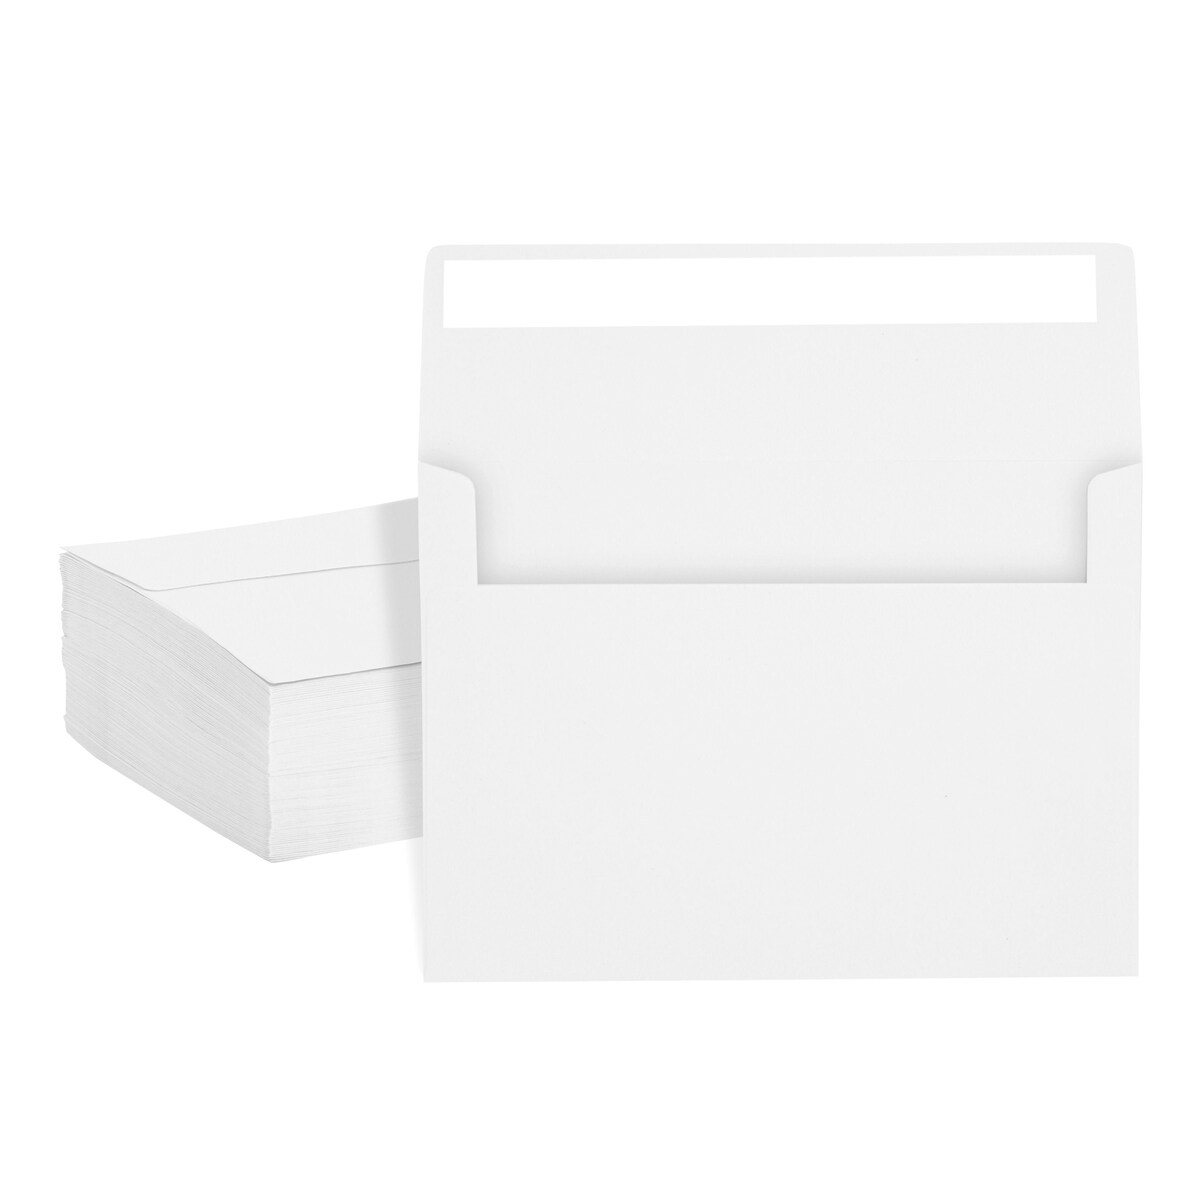 White A7 Envelopes White 5x7 Invitation Envelopes, Perfect for 5x7